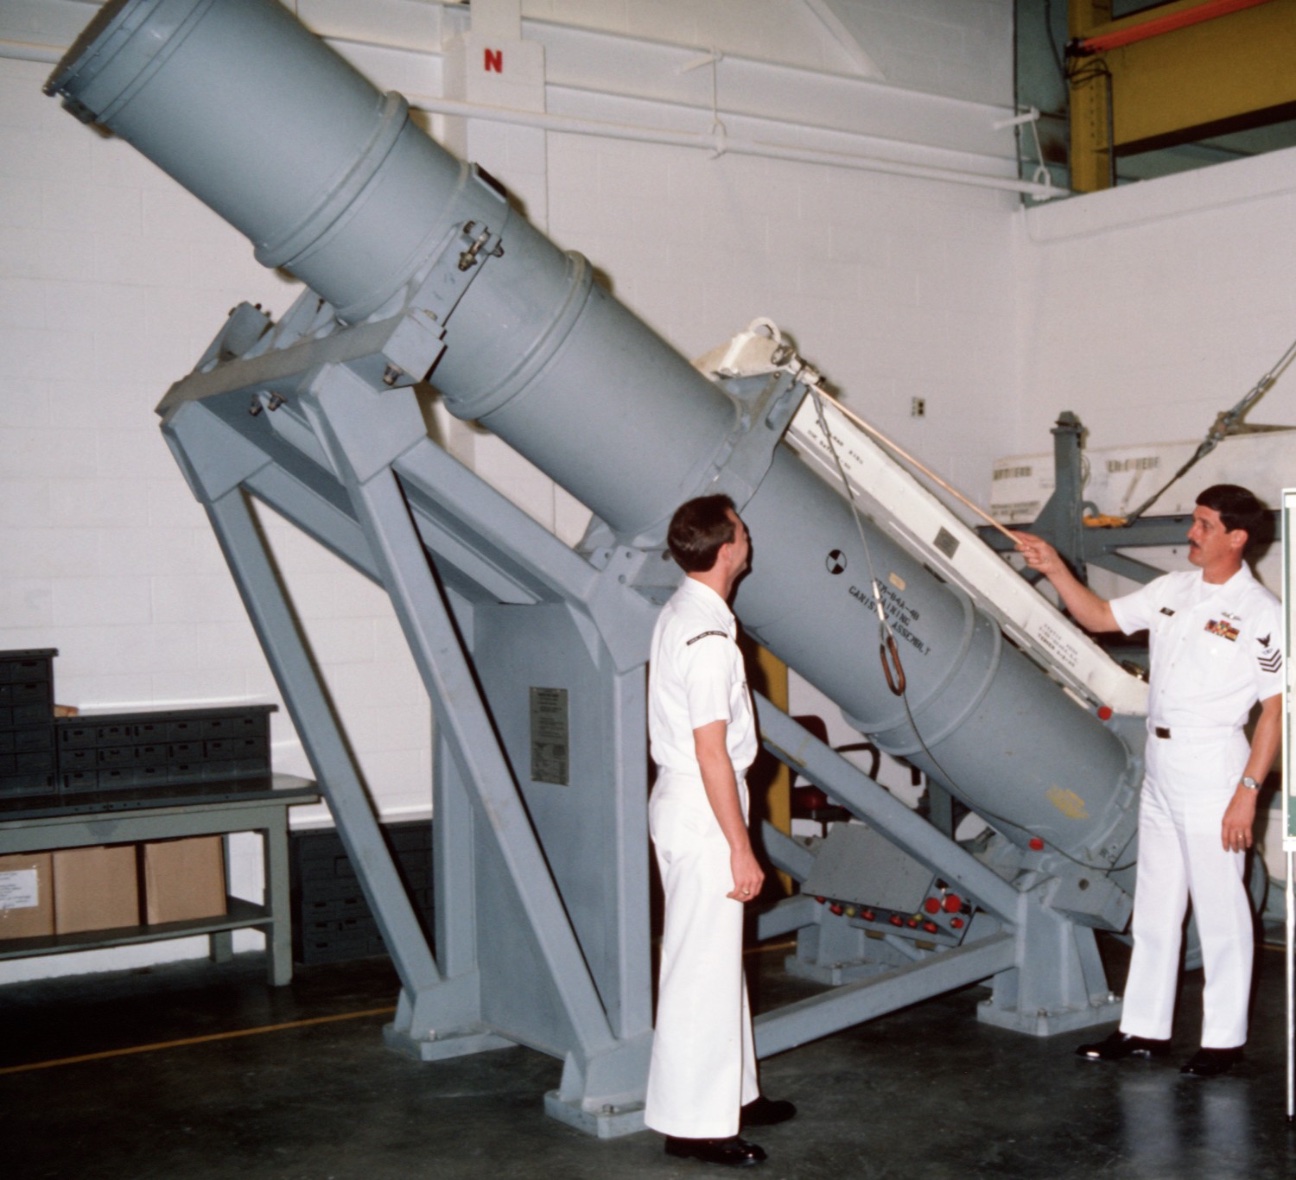 Training Harpoon launcher at a Navy school.